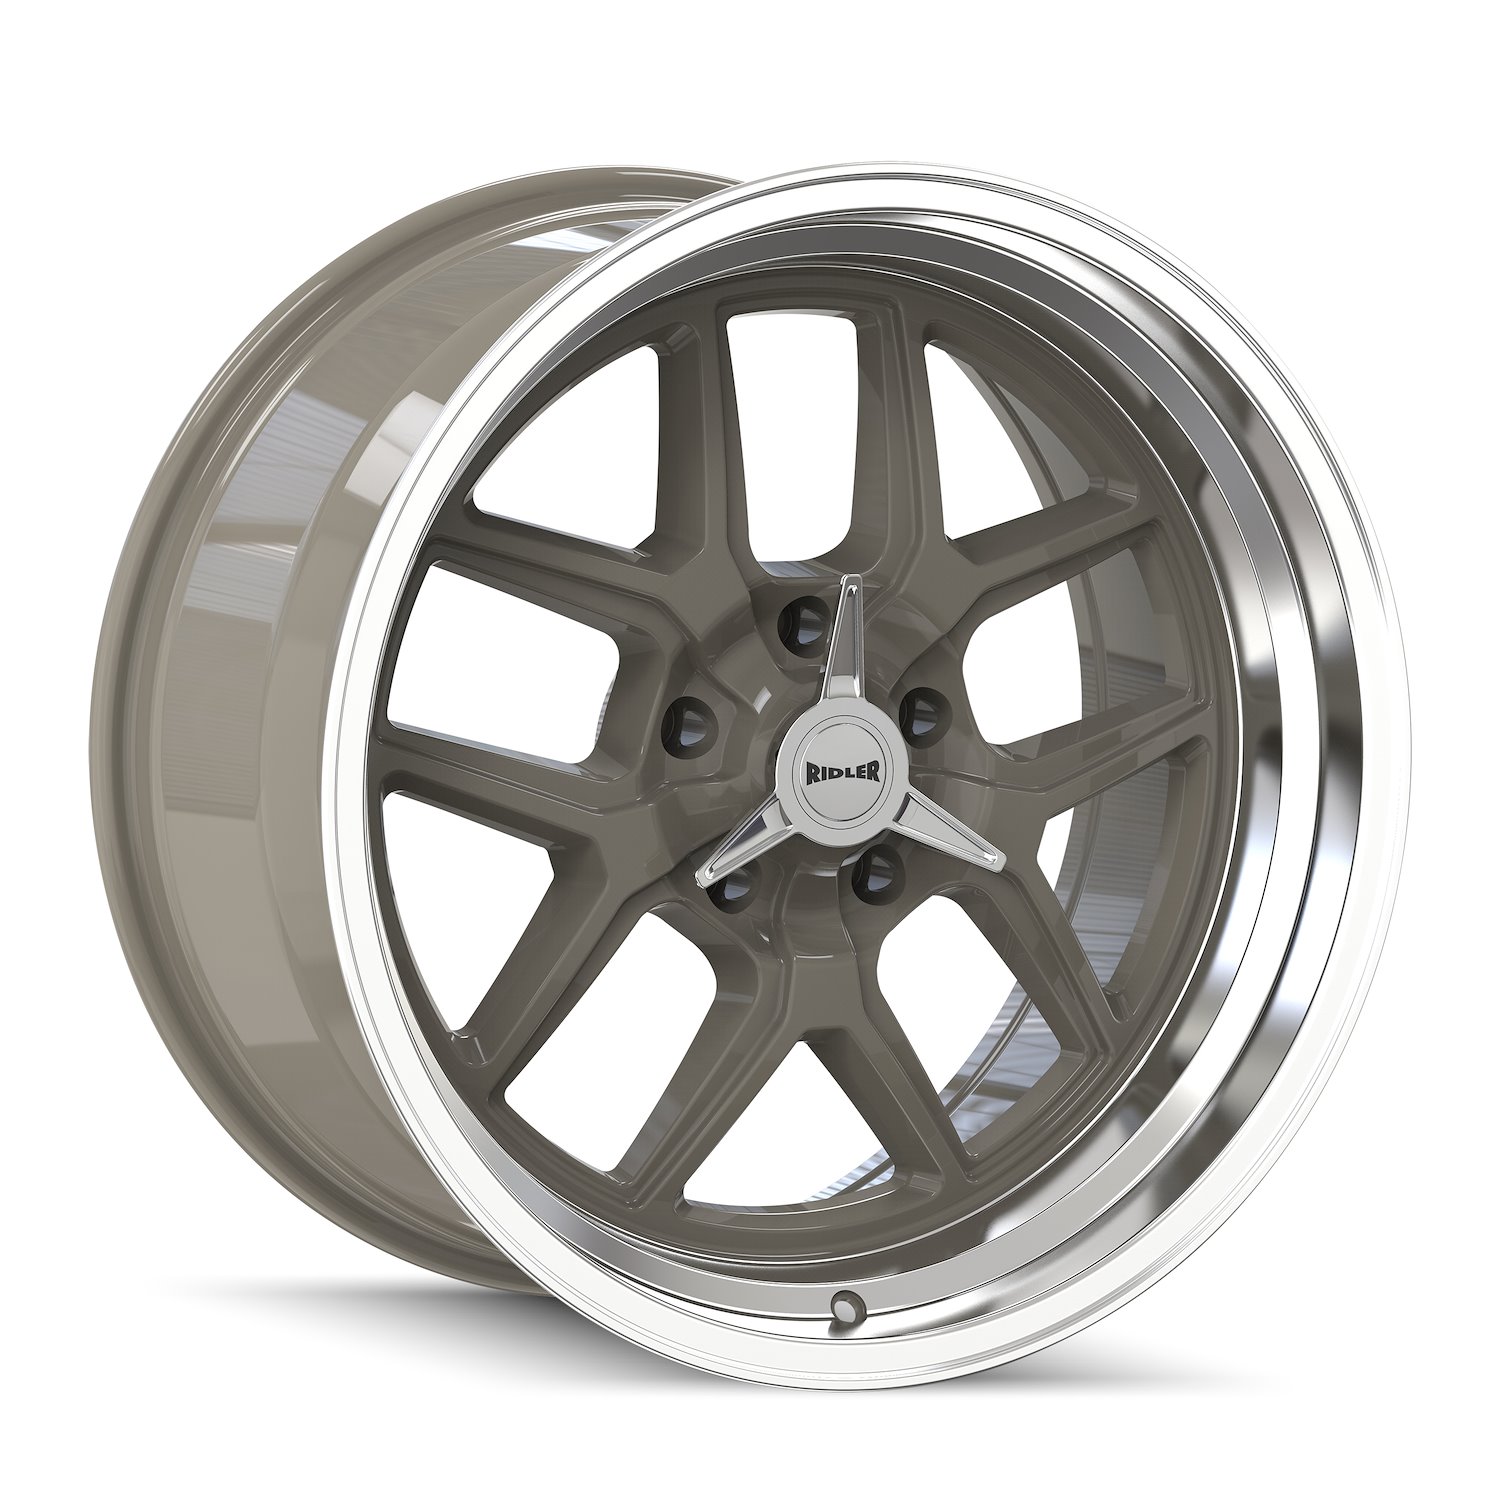 610-2865G 610-Series Wheel [Size: 20" x 8.50"] Gloss Grey Polished Finish